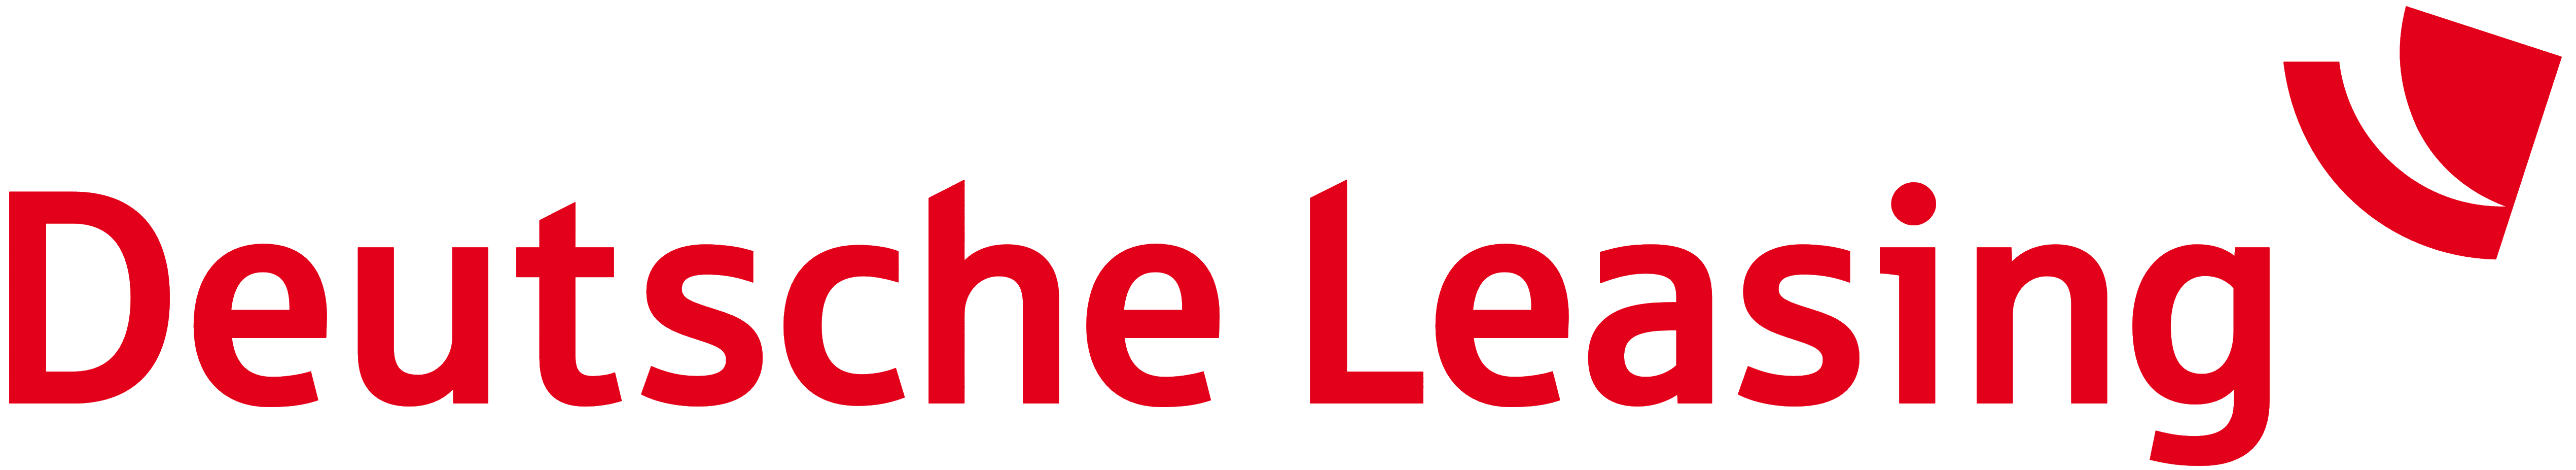 Deutsche Leasing logo, logotype